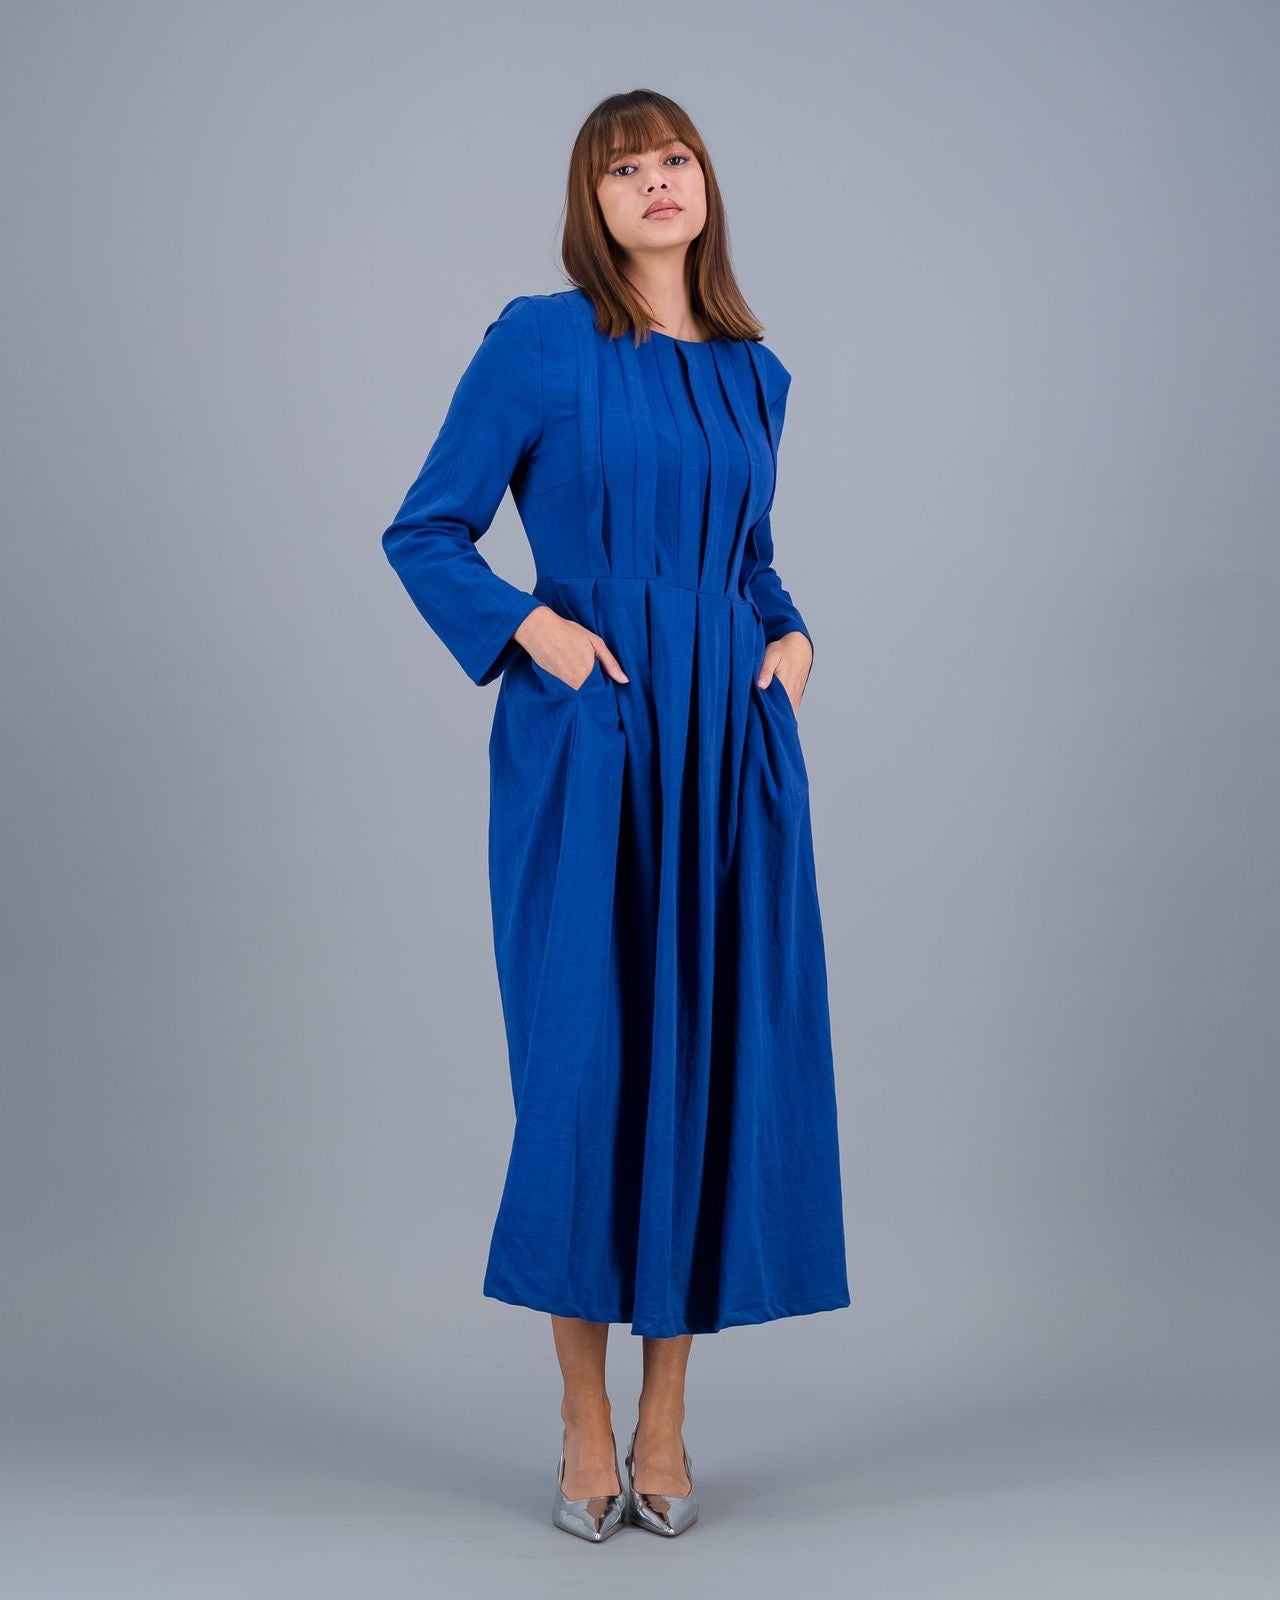 Simone Royal Blue Dress